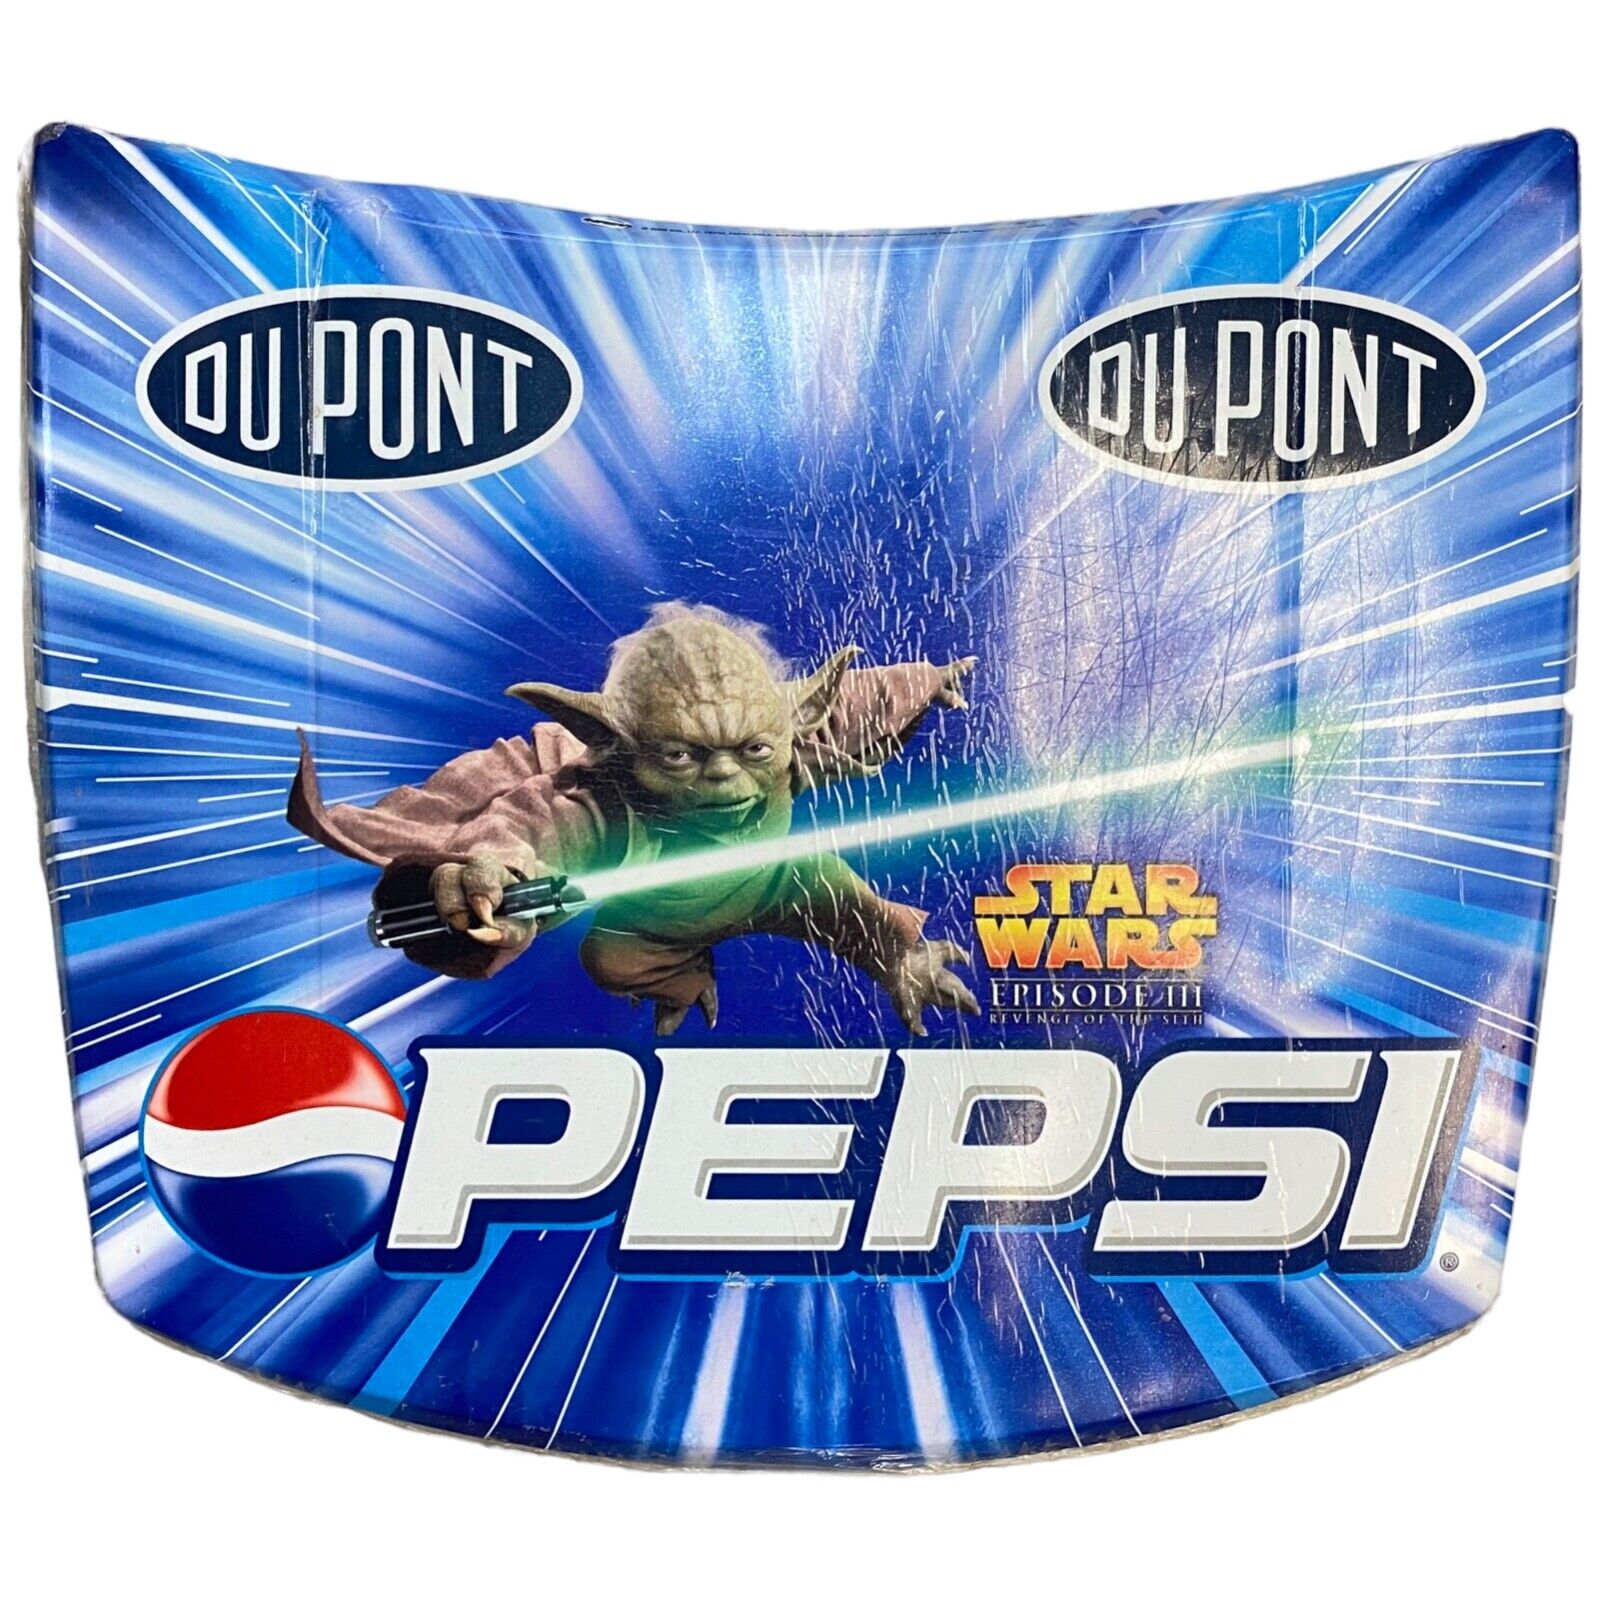 Star Wars Pepsi Nascar Dupont Metal Hood Episode III Yoda Jeff Gordon Replica